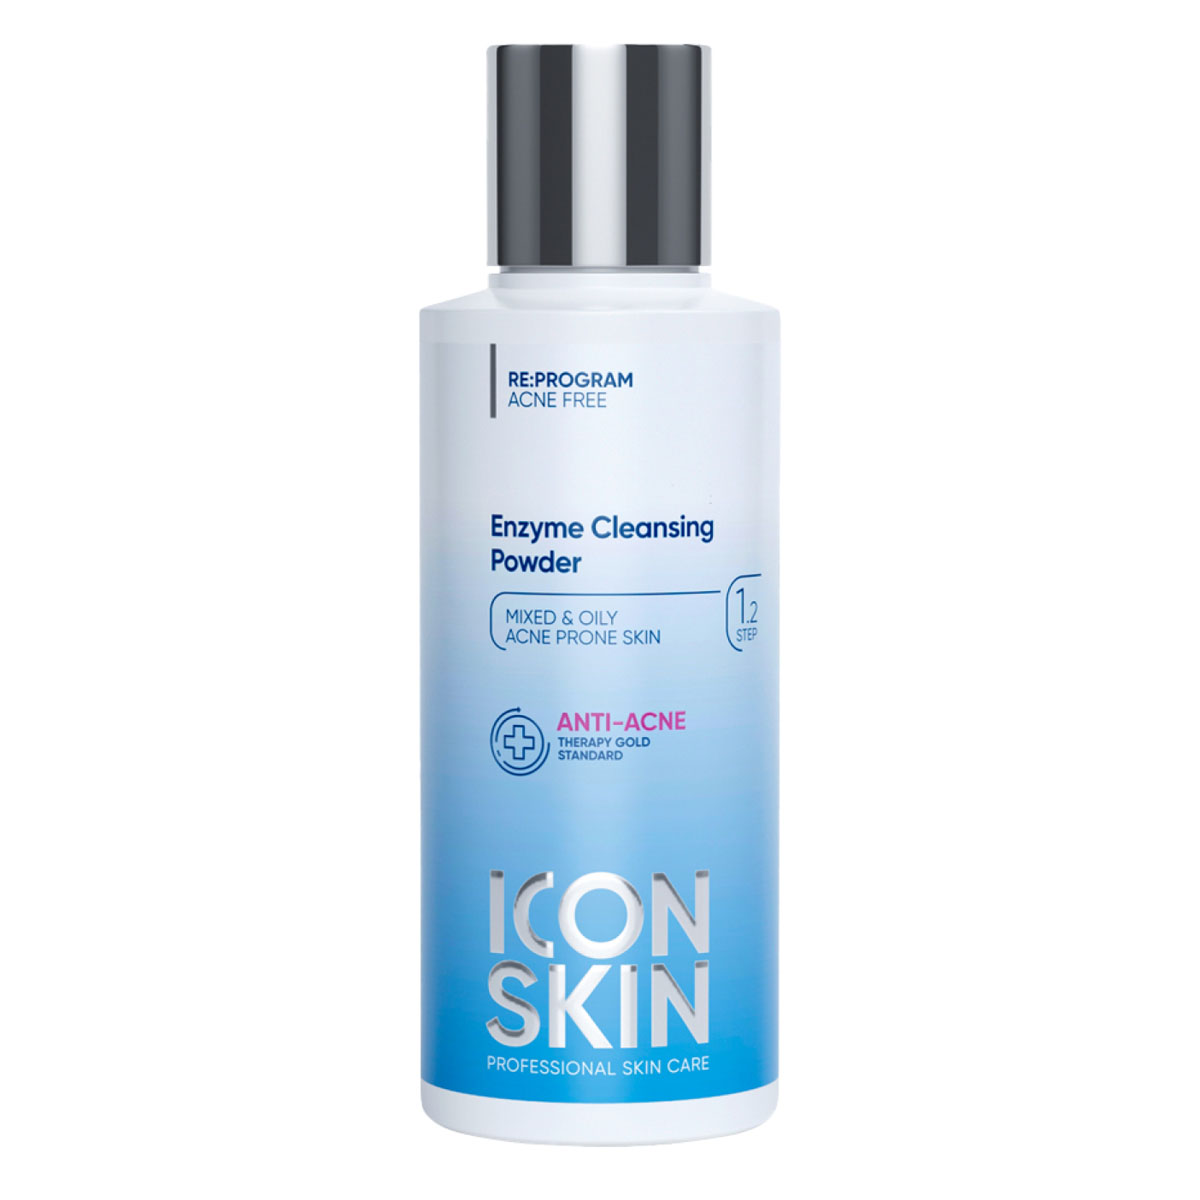 Icon Skin Очищающая энзимная пудра для умывания, 75 г (Icon Skin, Re:Program) icon skin энзимная пудра для умывания vitamin c shine 75 г